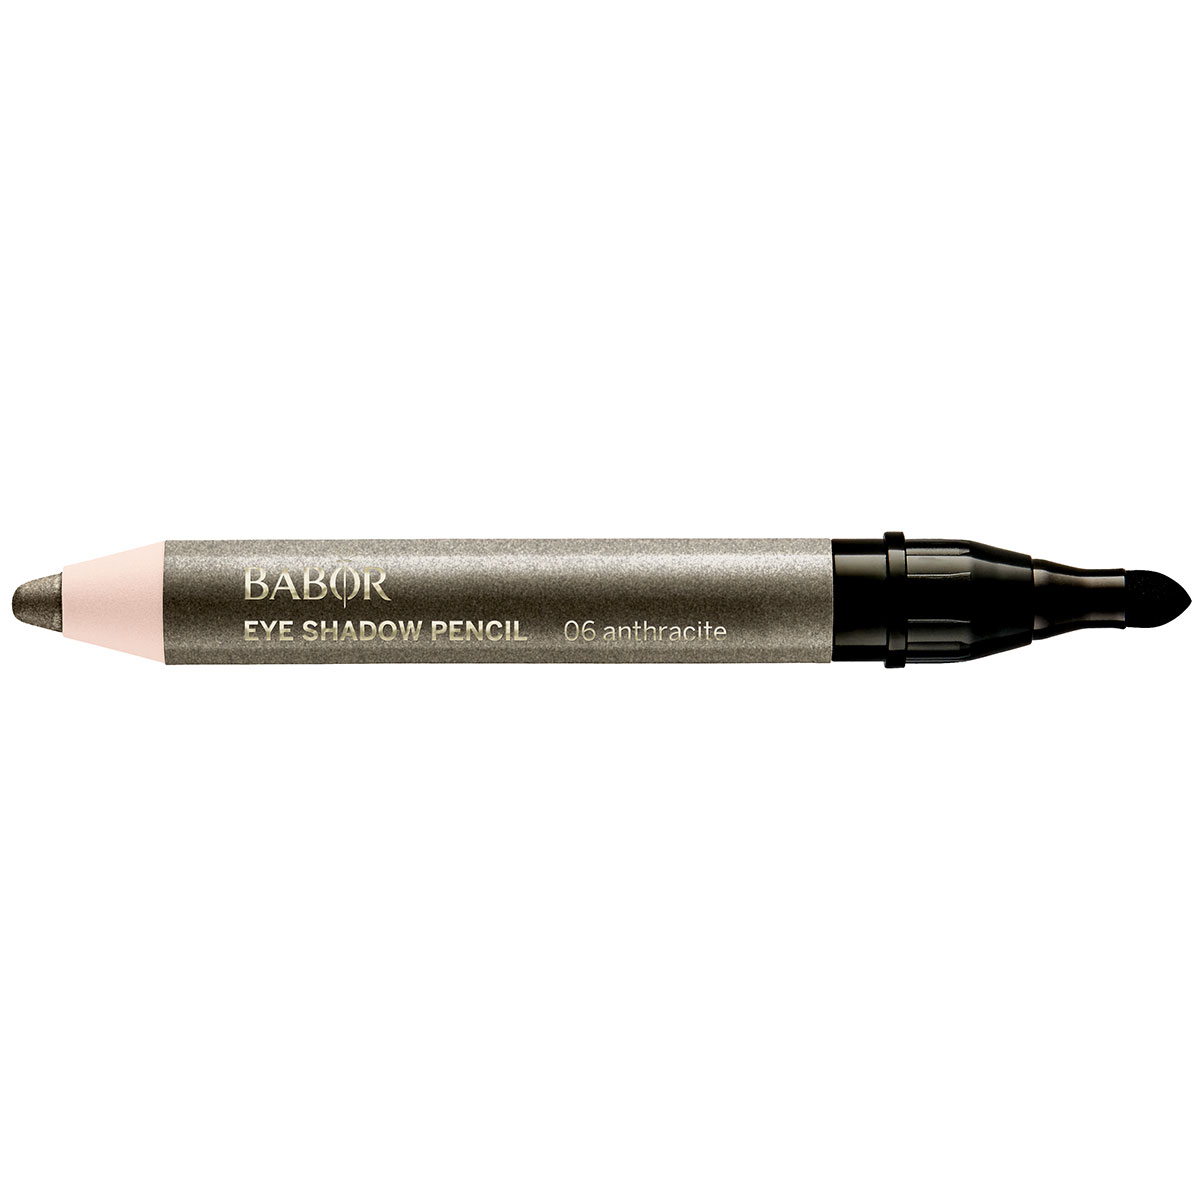 Тени-Стик для Век, тон 06 антрацит/Eye Shadow Pencil, 06 anthracite